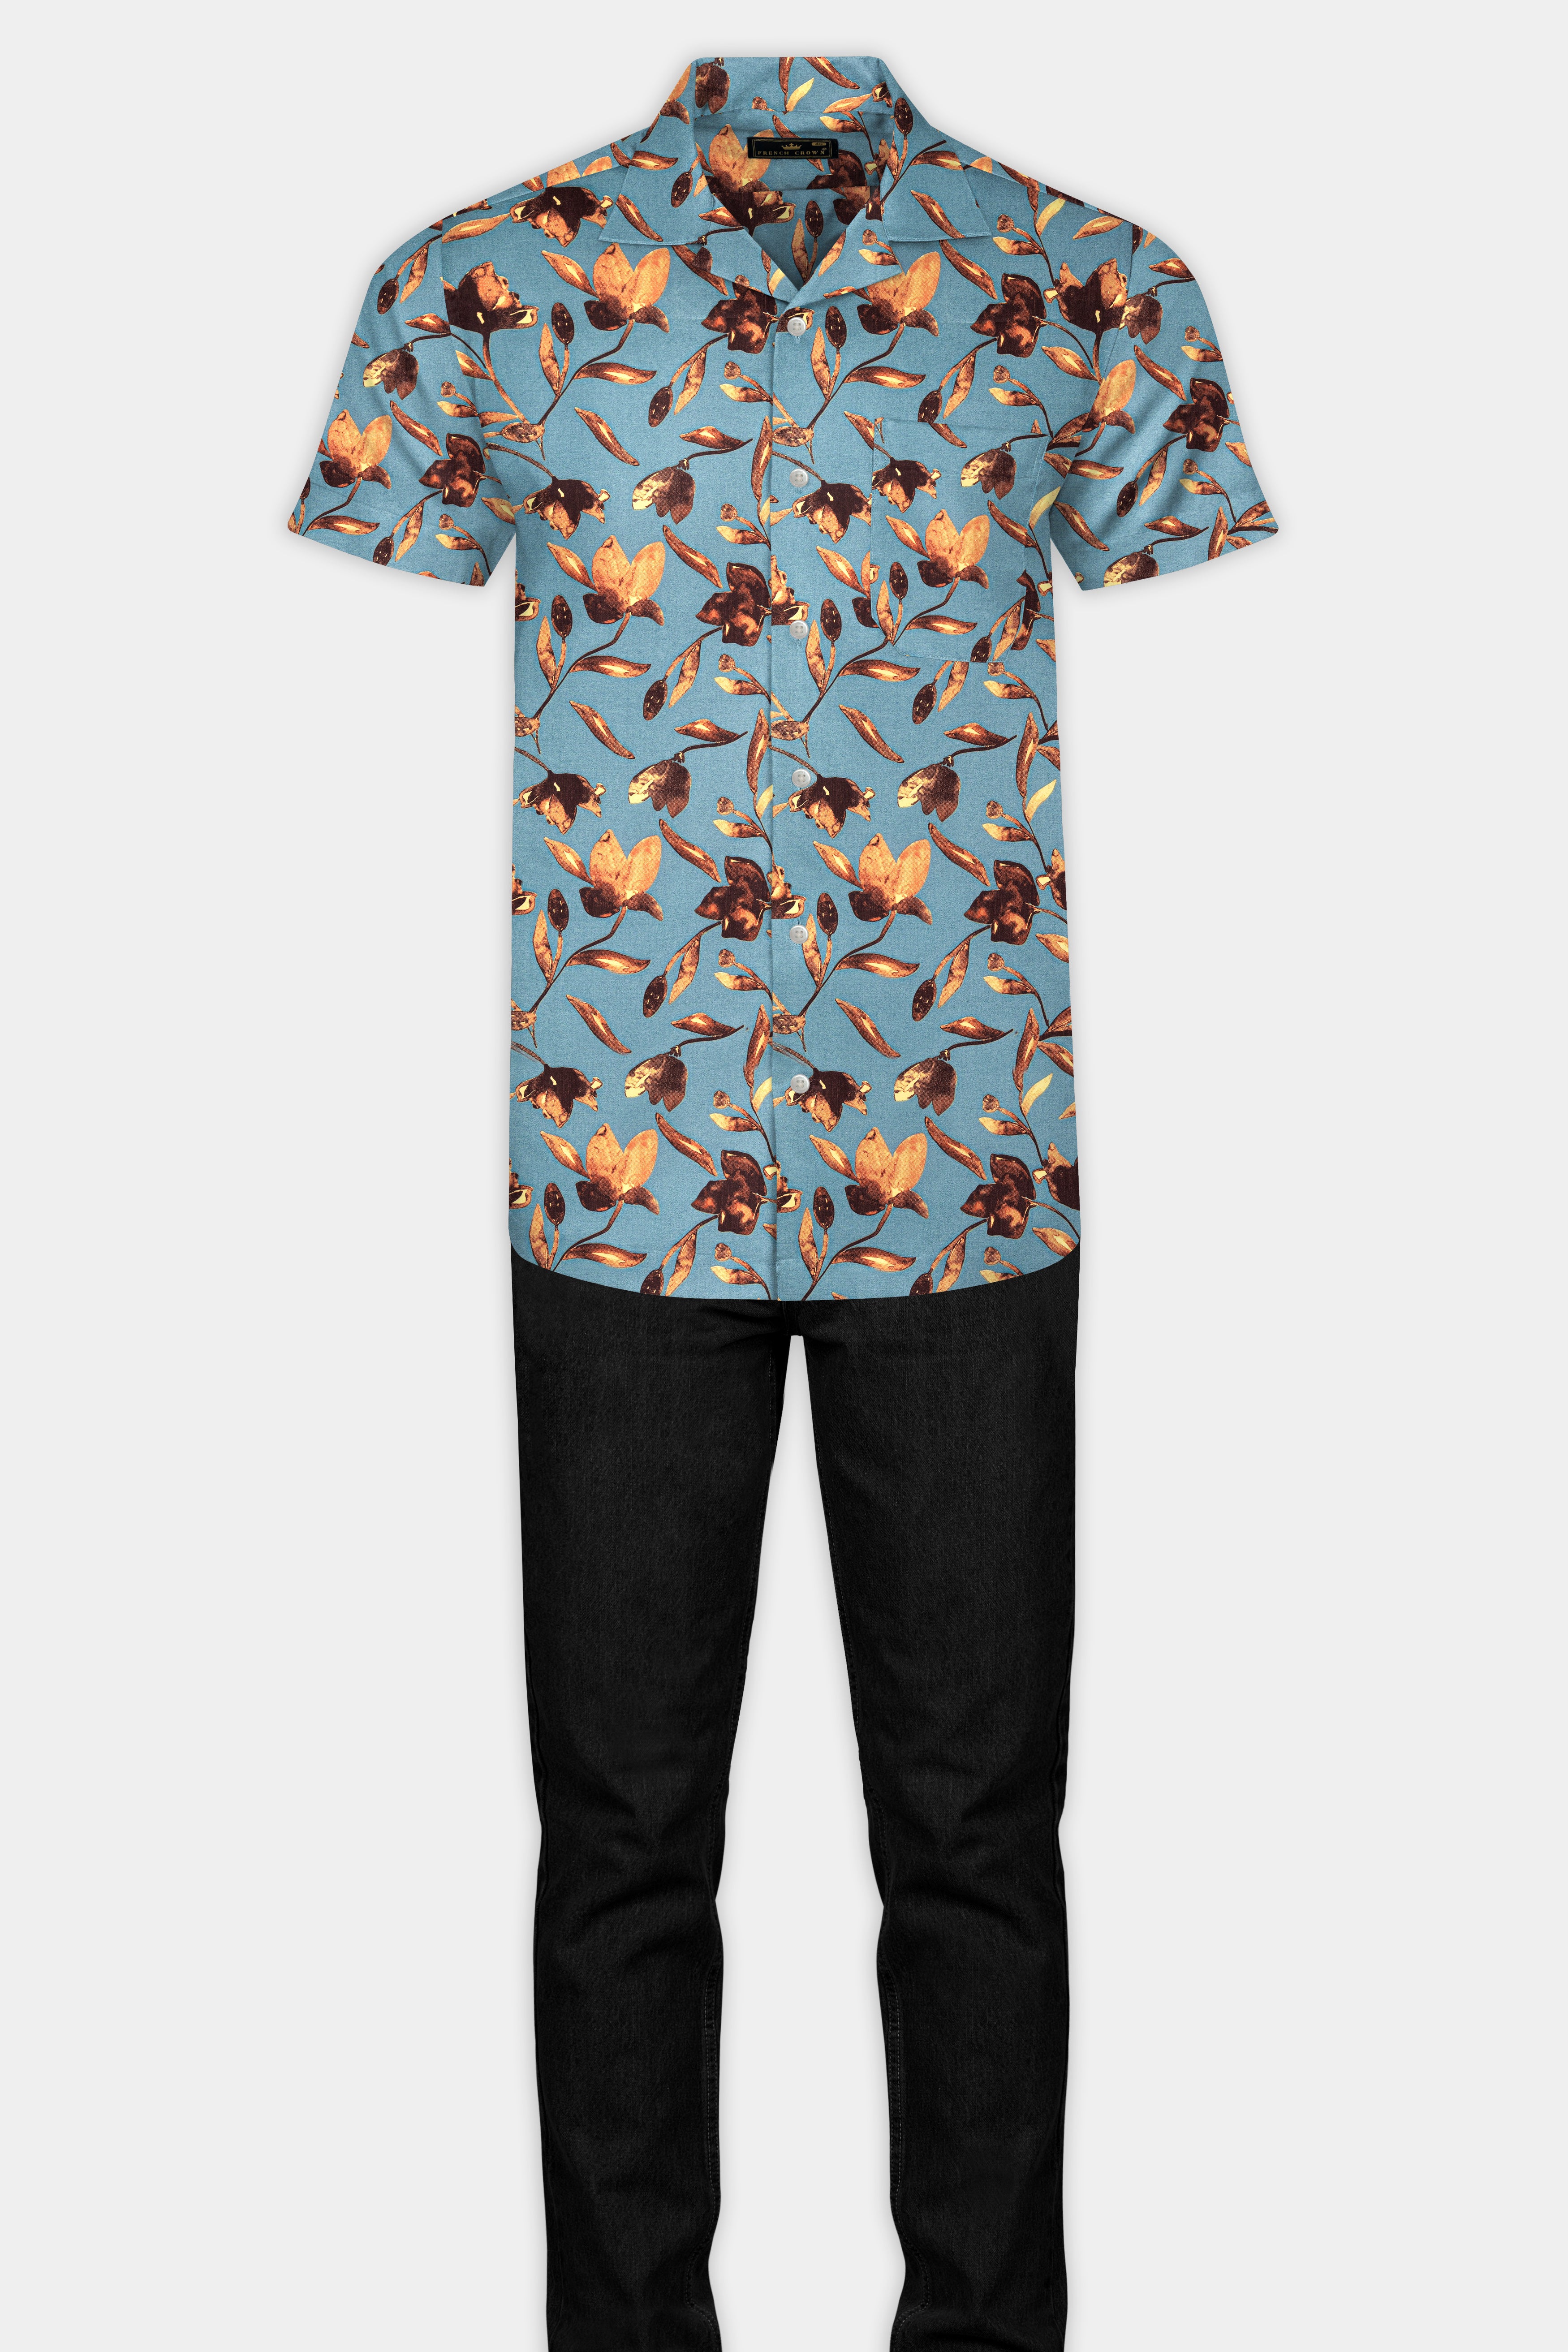 Cascade Blue and Tangerine Orange Floral Printed Subtle Sheen Super Soft Premium Cotton Shirt